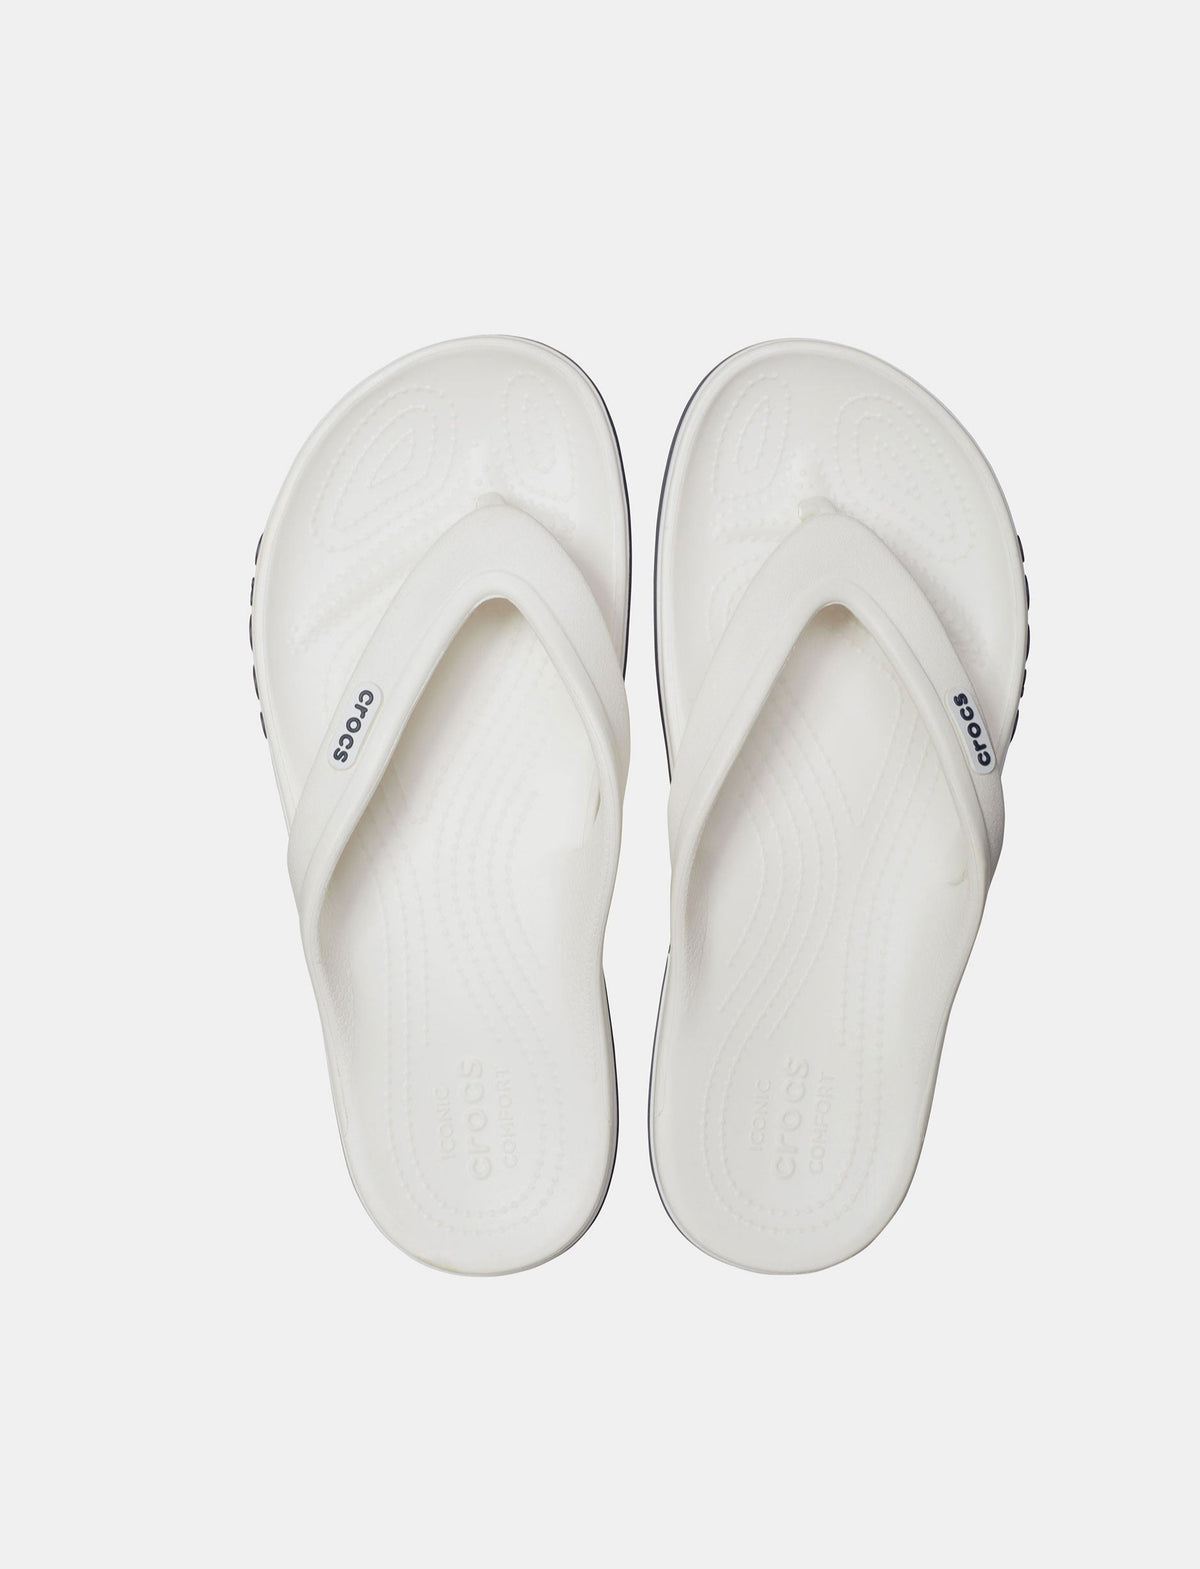 Crocs Bayaband Flip - כפכפים לגבר קרוקס באיה באנד בצבע לבן/נייבי-Crocs-M10/W12-נאקו